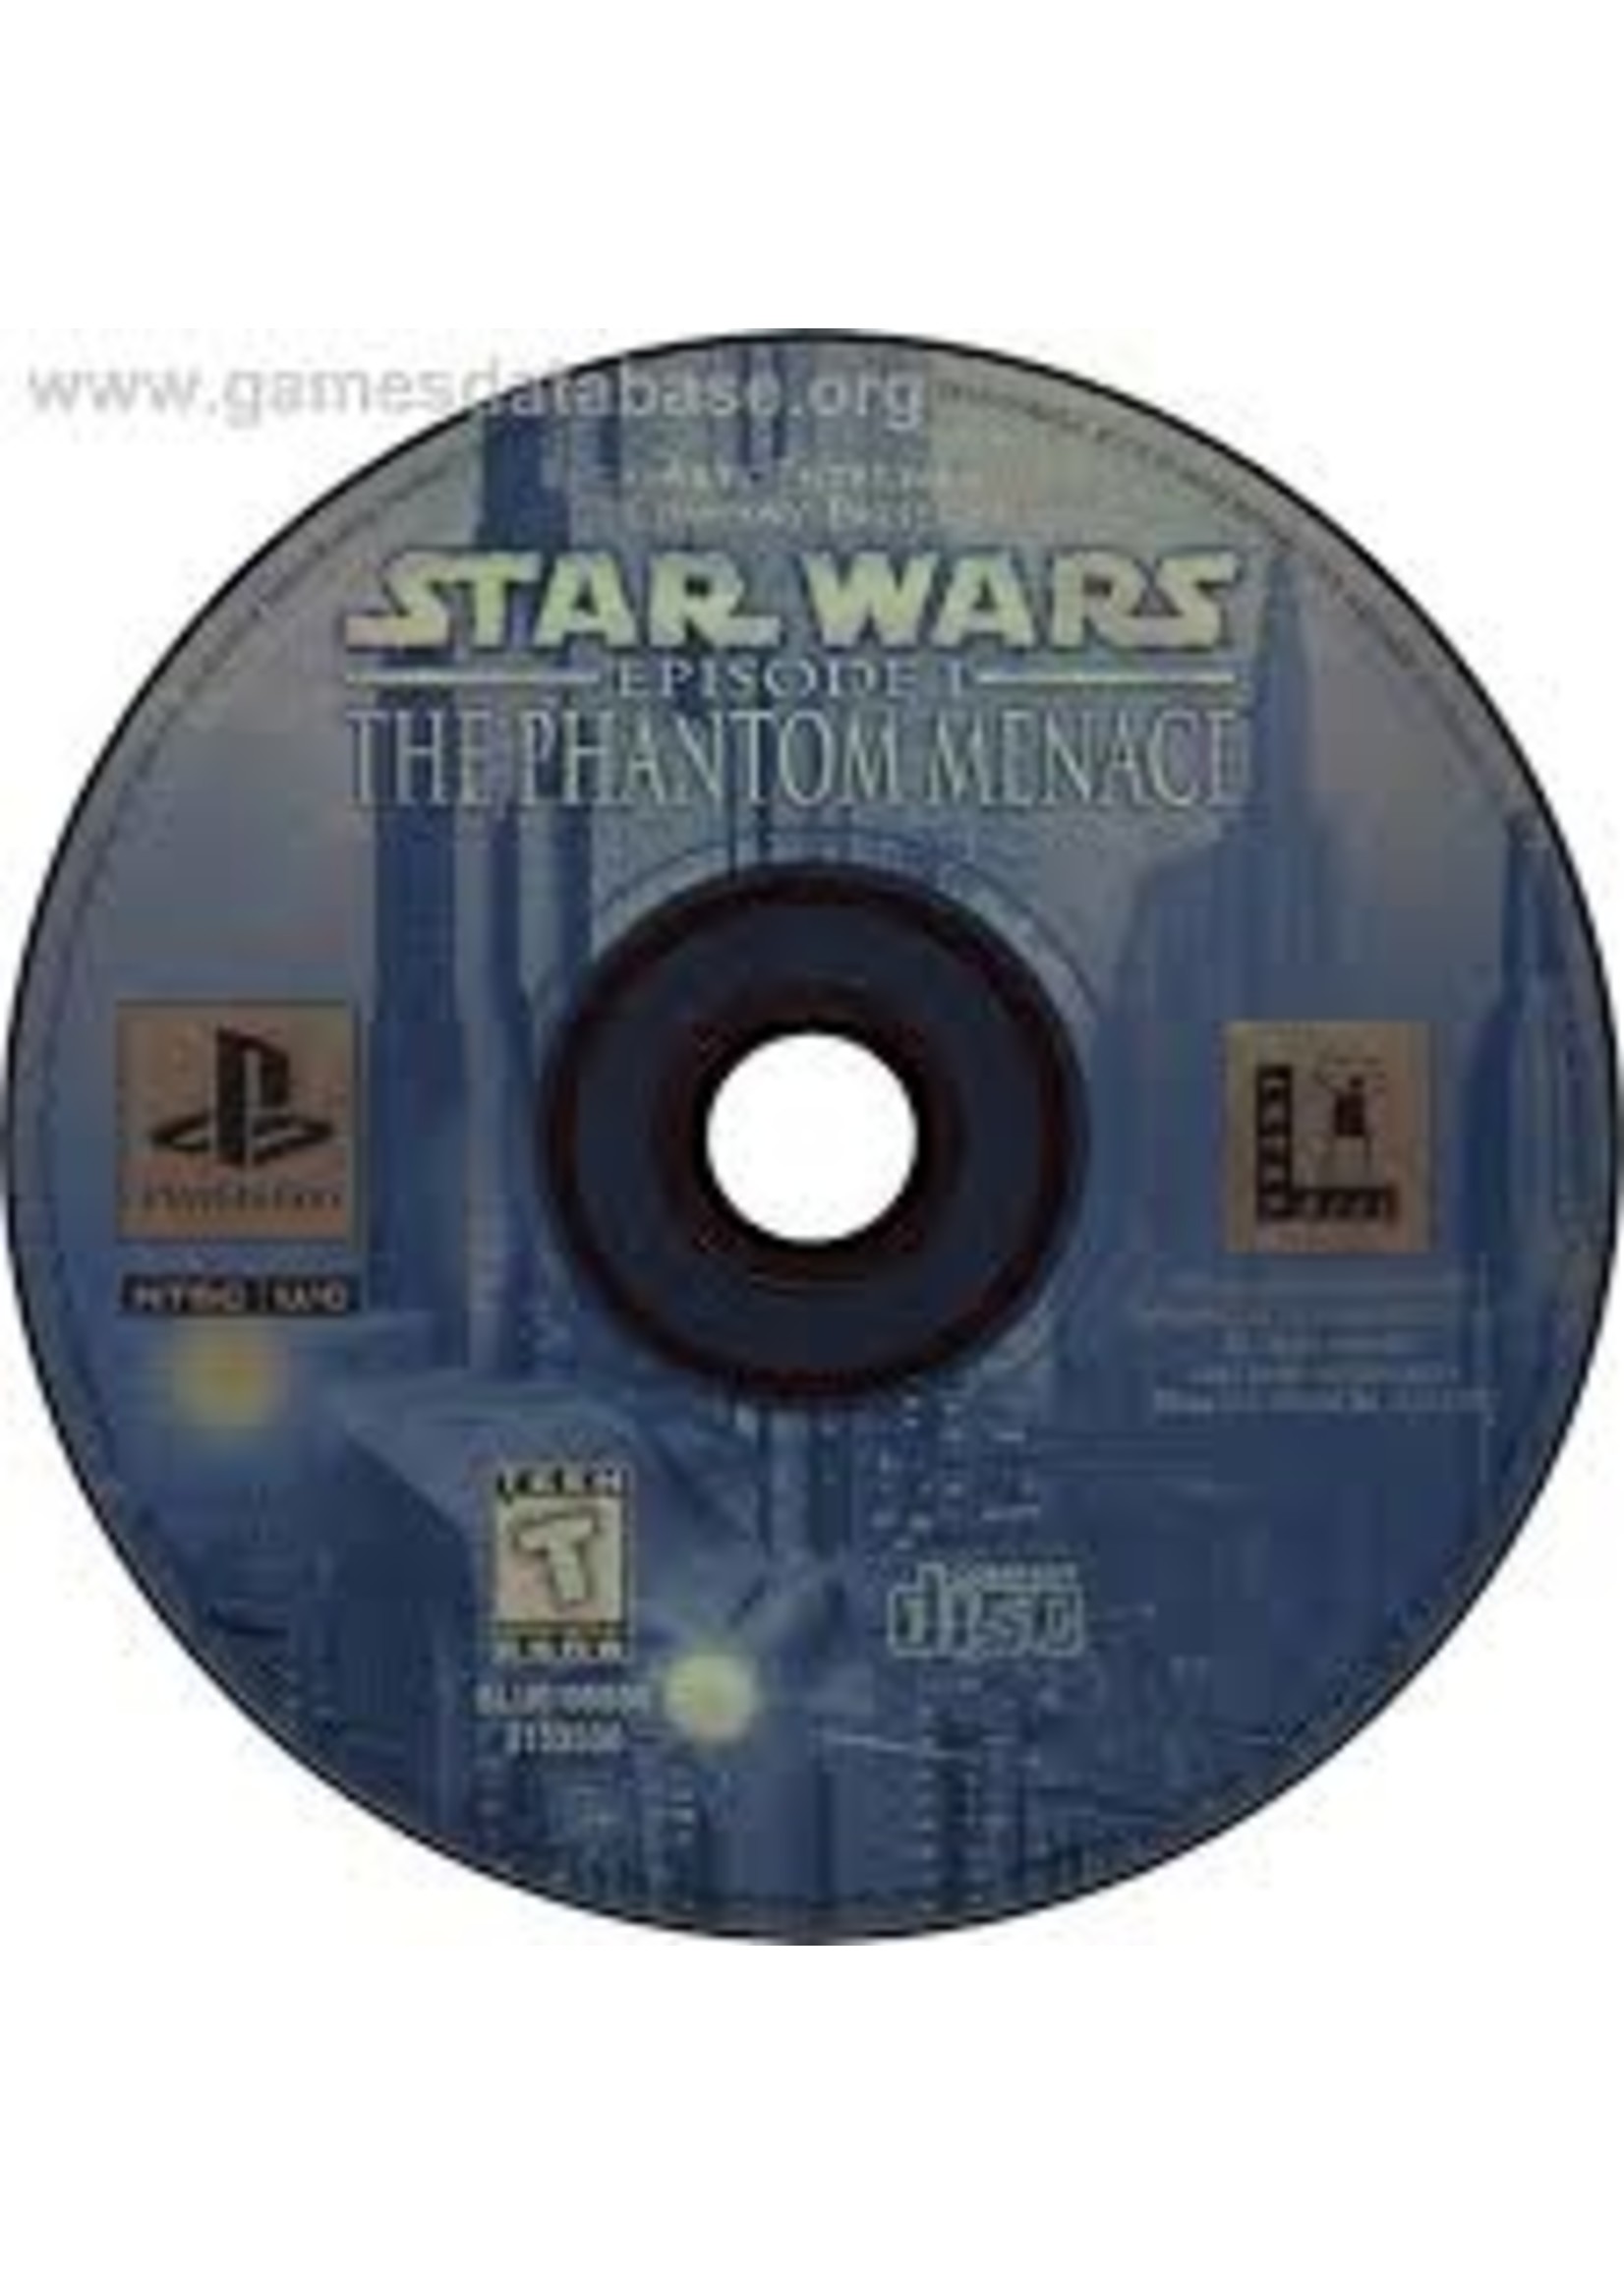 Sony Playstation 1 (PS1) Star Wars Episode I Phantom Menace - Print